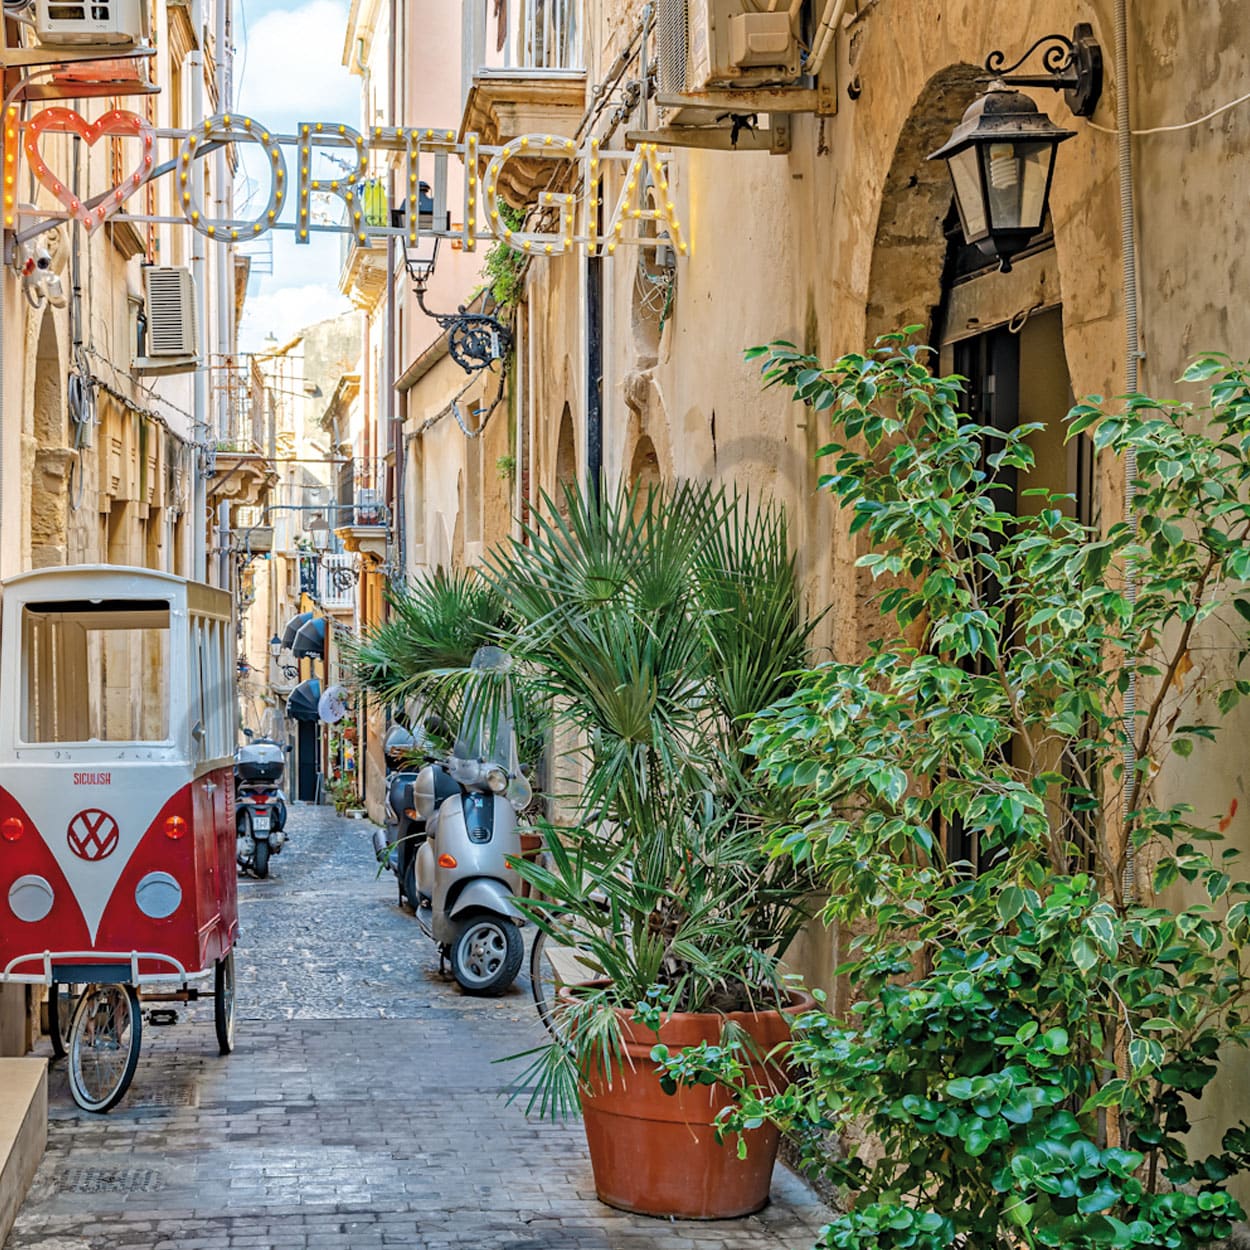 Reisen Sie mit jacobs touristik international nach Sizilien